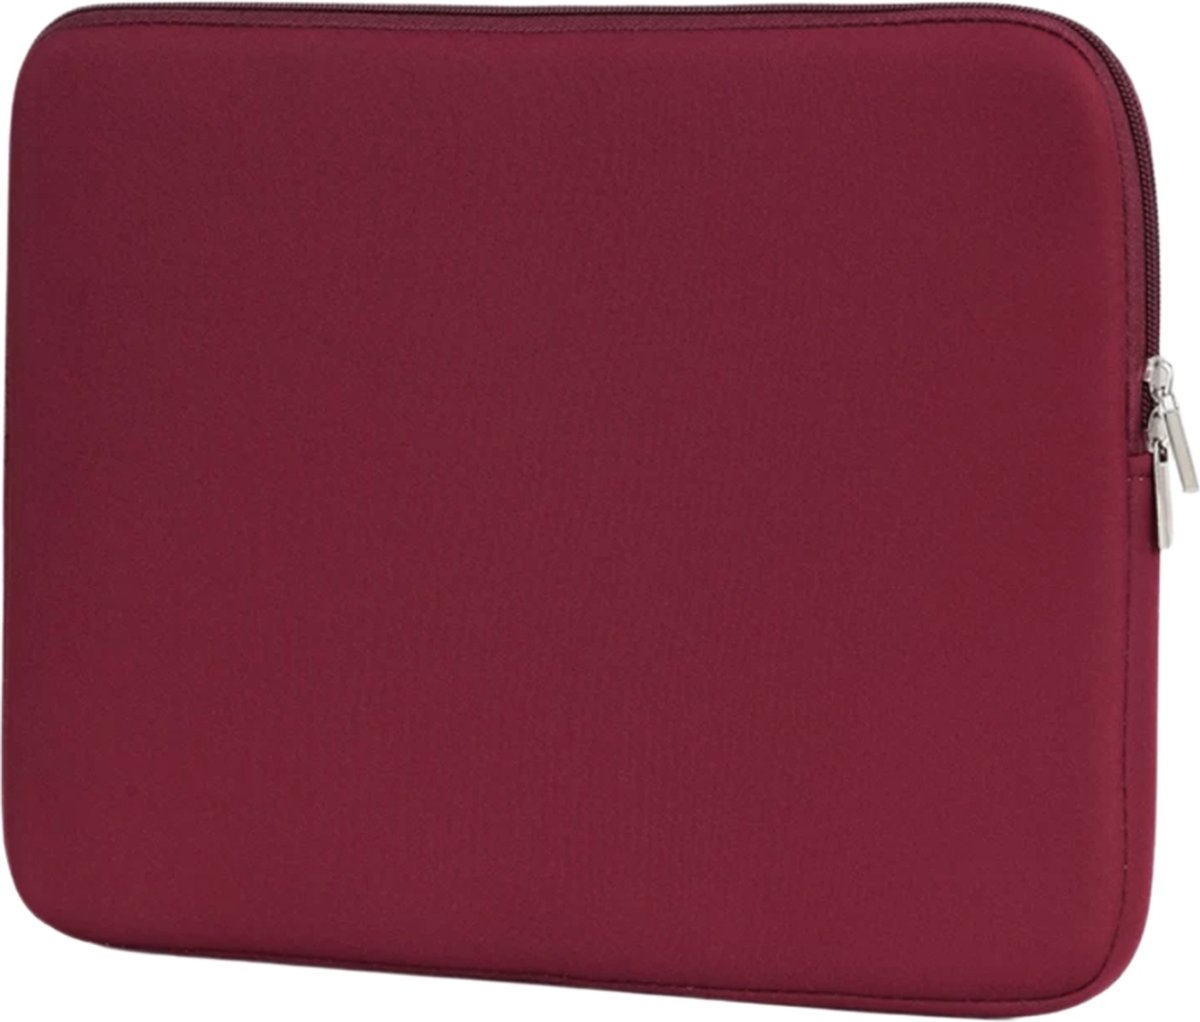 Laptopcase – 15,6 inch laptop – Soft touch- extra bescherming – bordeaux rood - Dubbele Ritssluiting